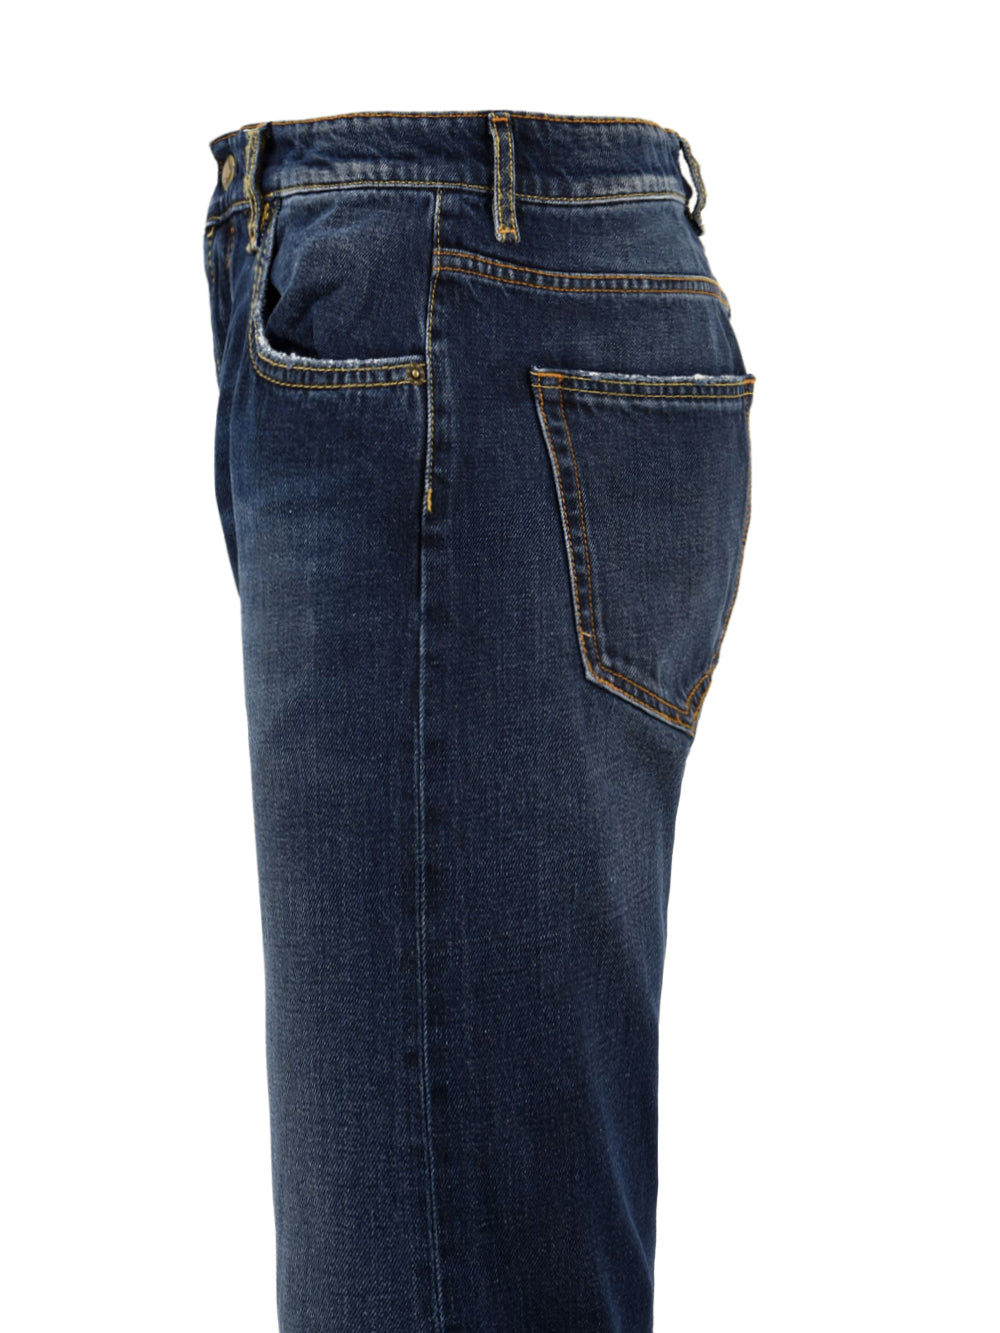 Jeans Uomo Mod 5 Denim Blu, Modfitters, lato